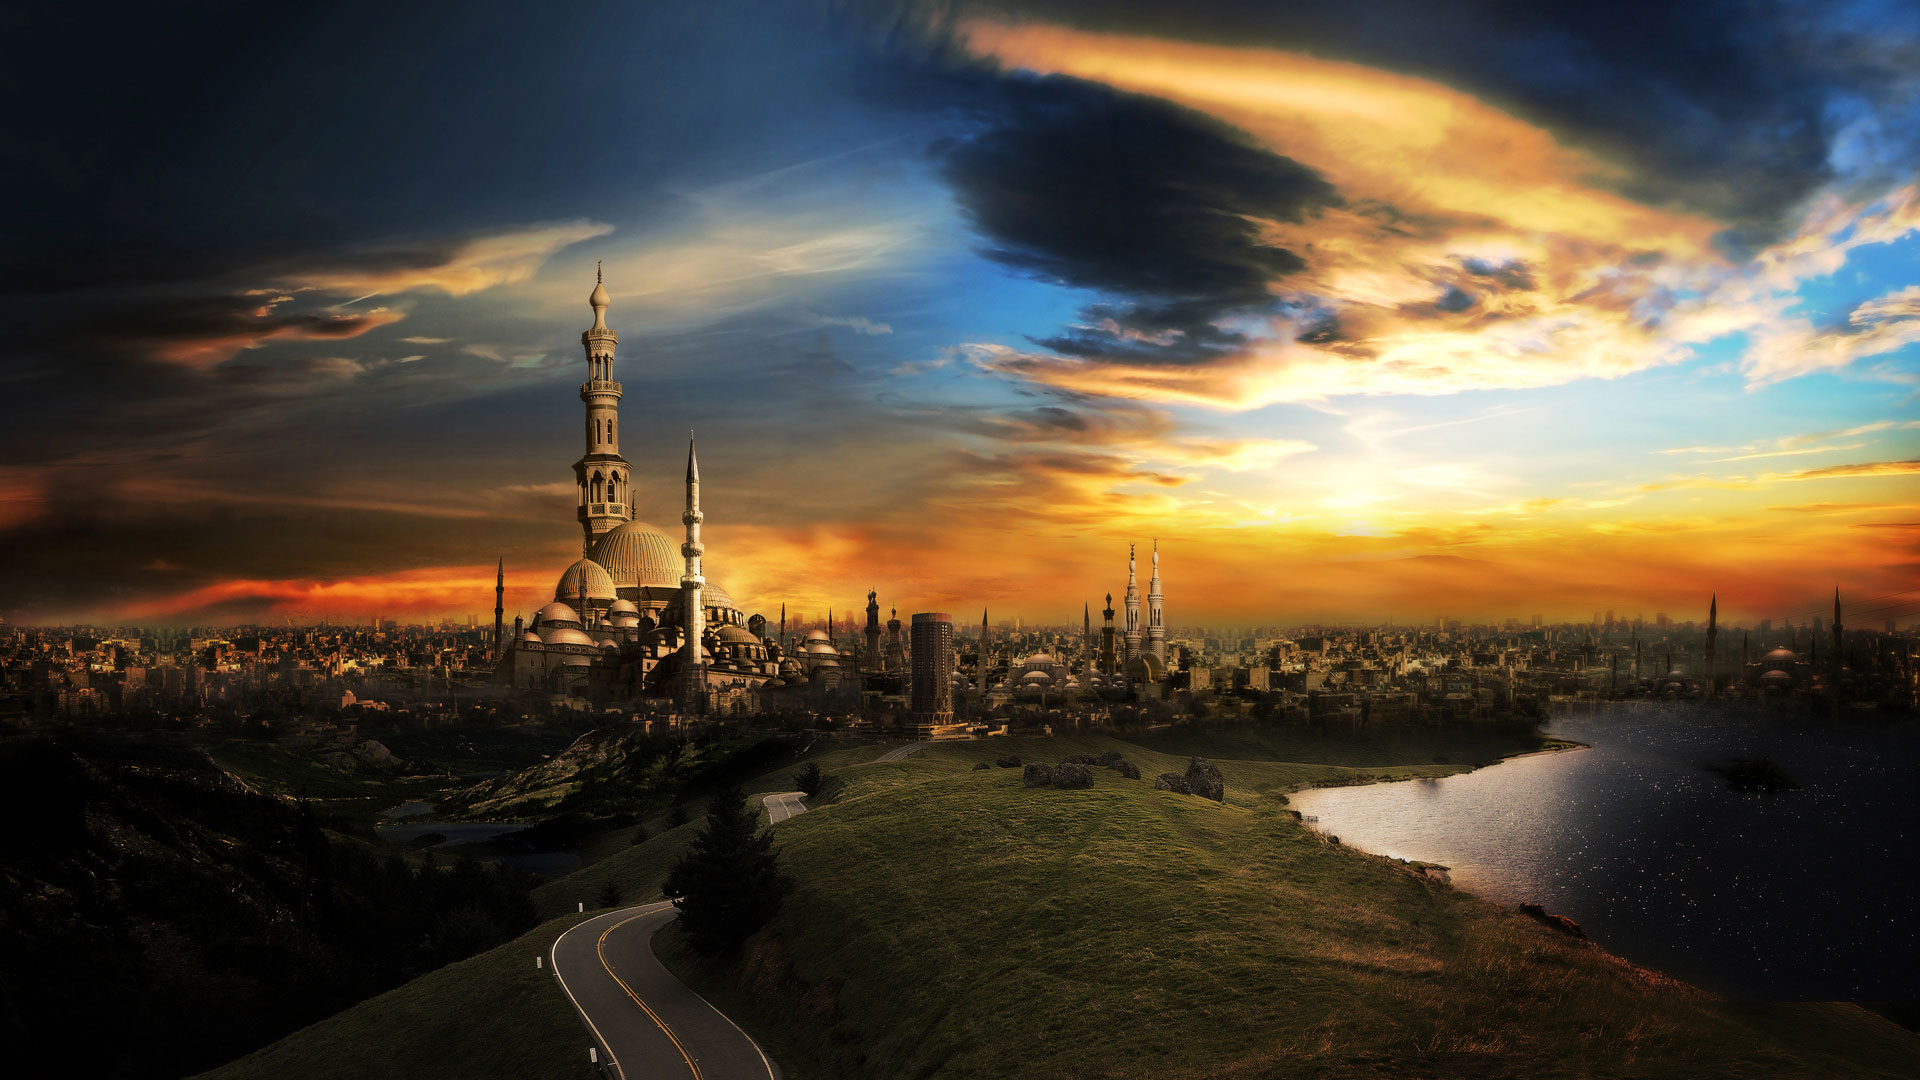 islam, man made, cgi, road, landscape, lake, city, cairo, sky, cloud, sunset 5K